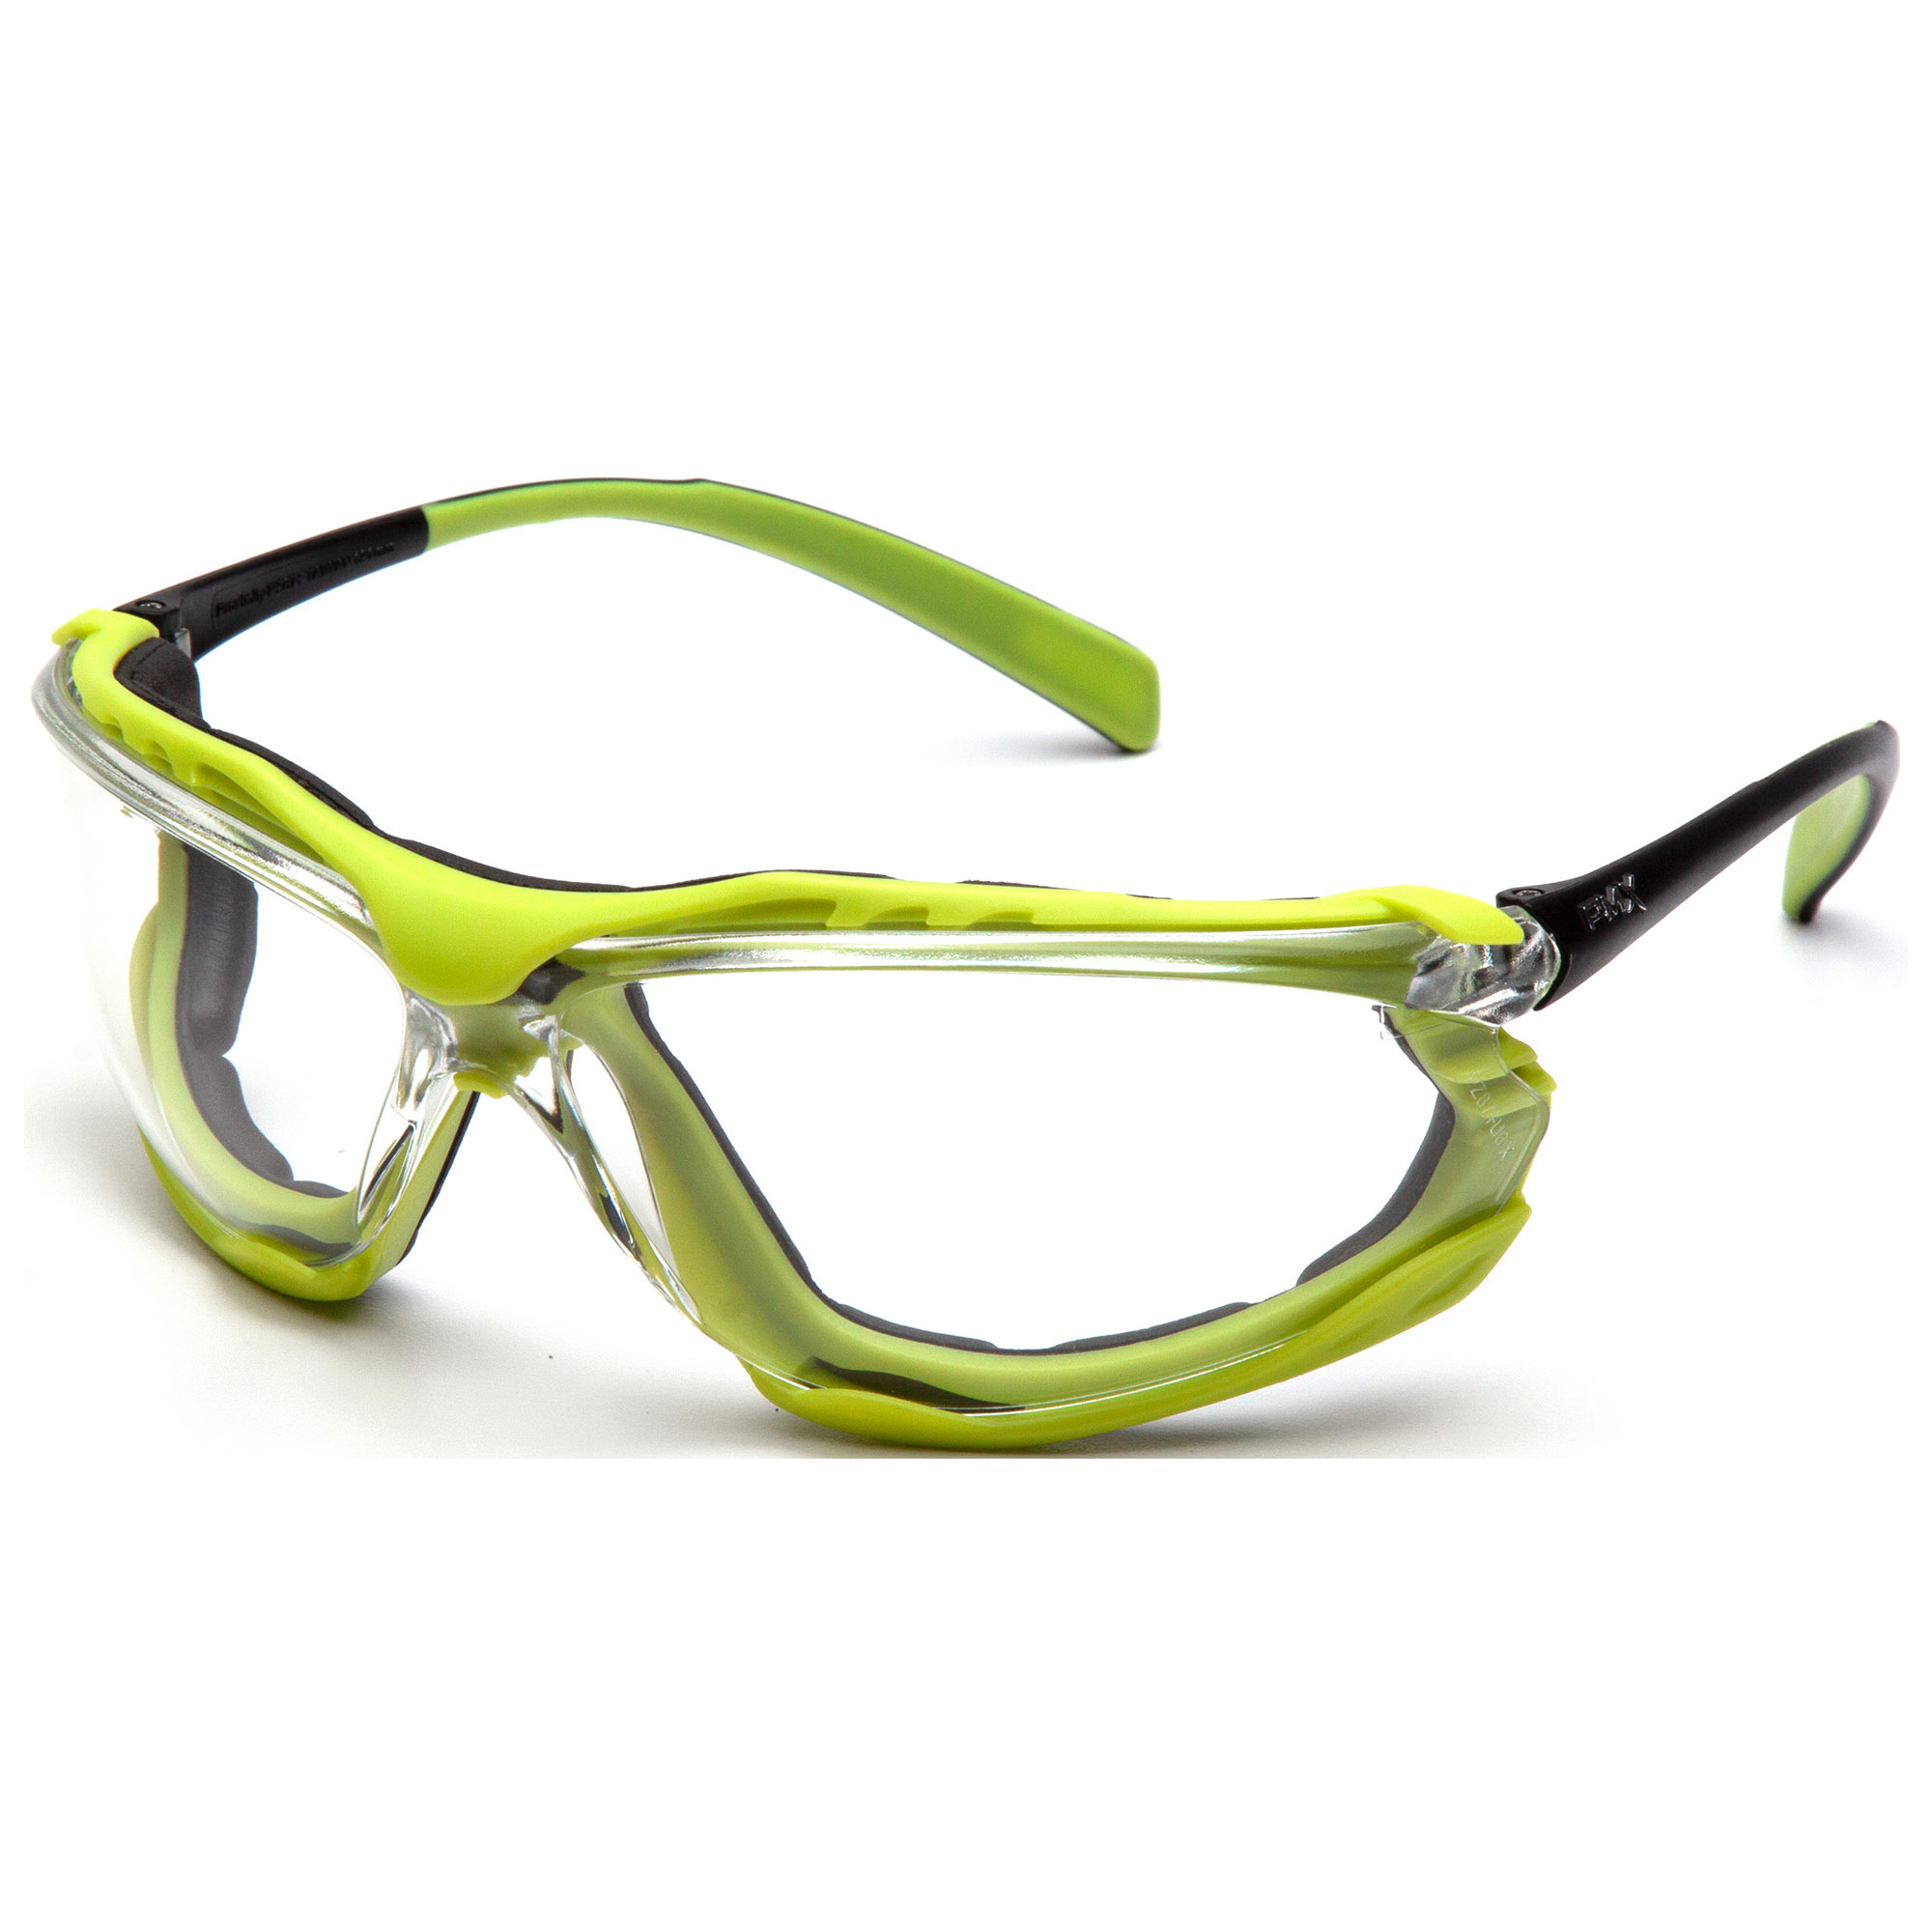 Pyramex Sbl9310stm Proximity Safety Glasses Black Lime Foam Lined Frame Clear H2max Anti Fog